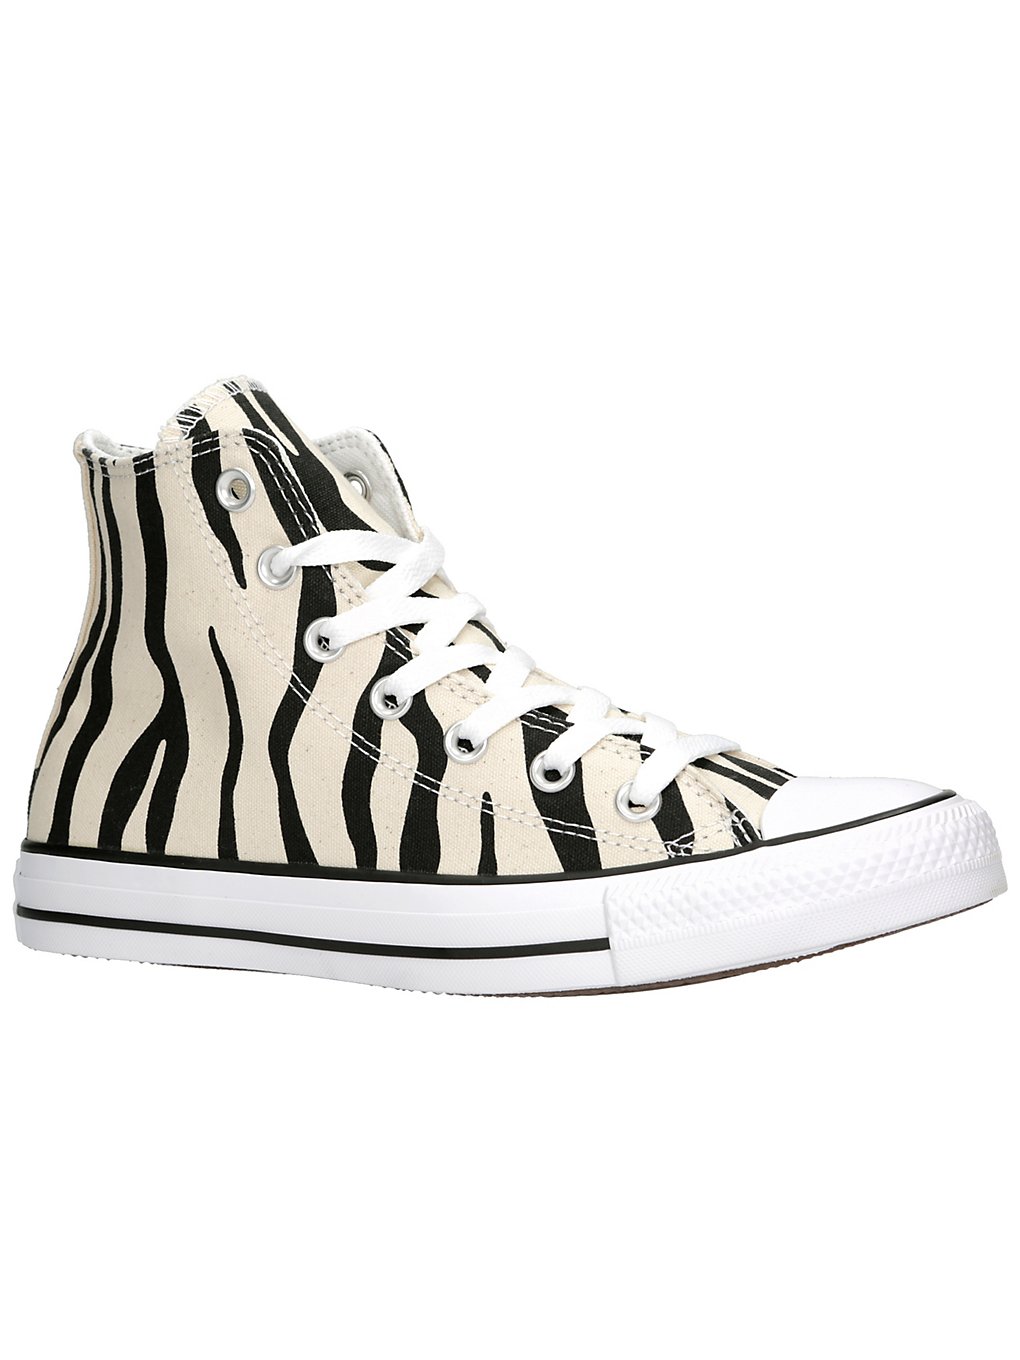 Converse Chuck Taylor All Star Canvas Zebra HI Sneakers white